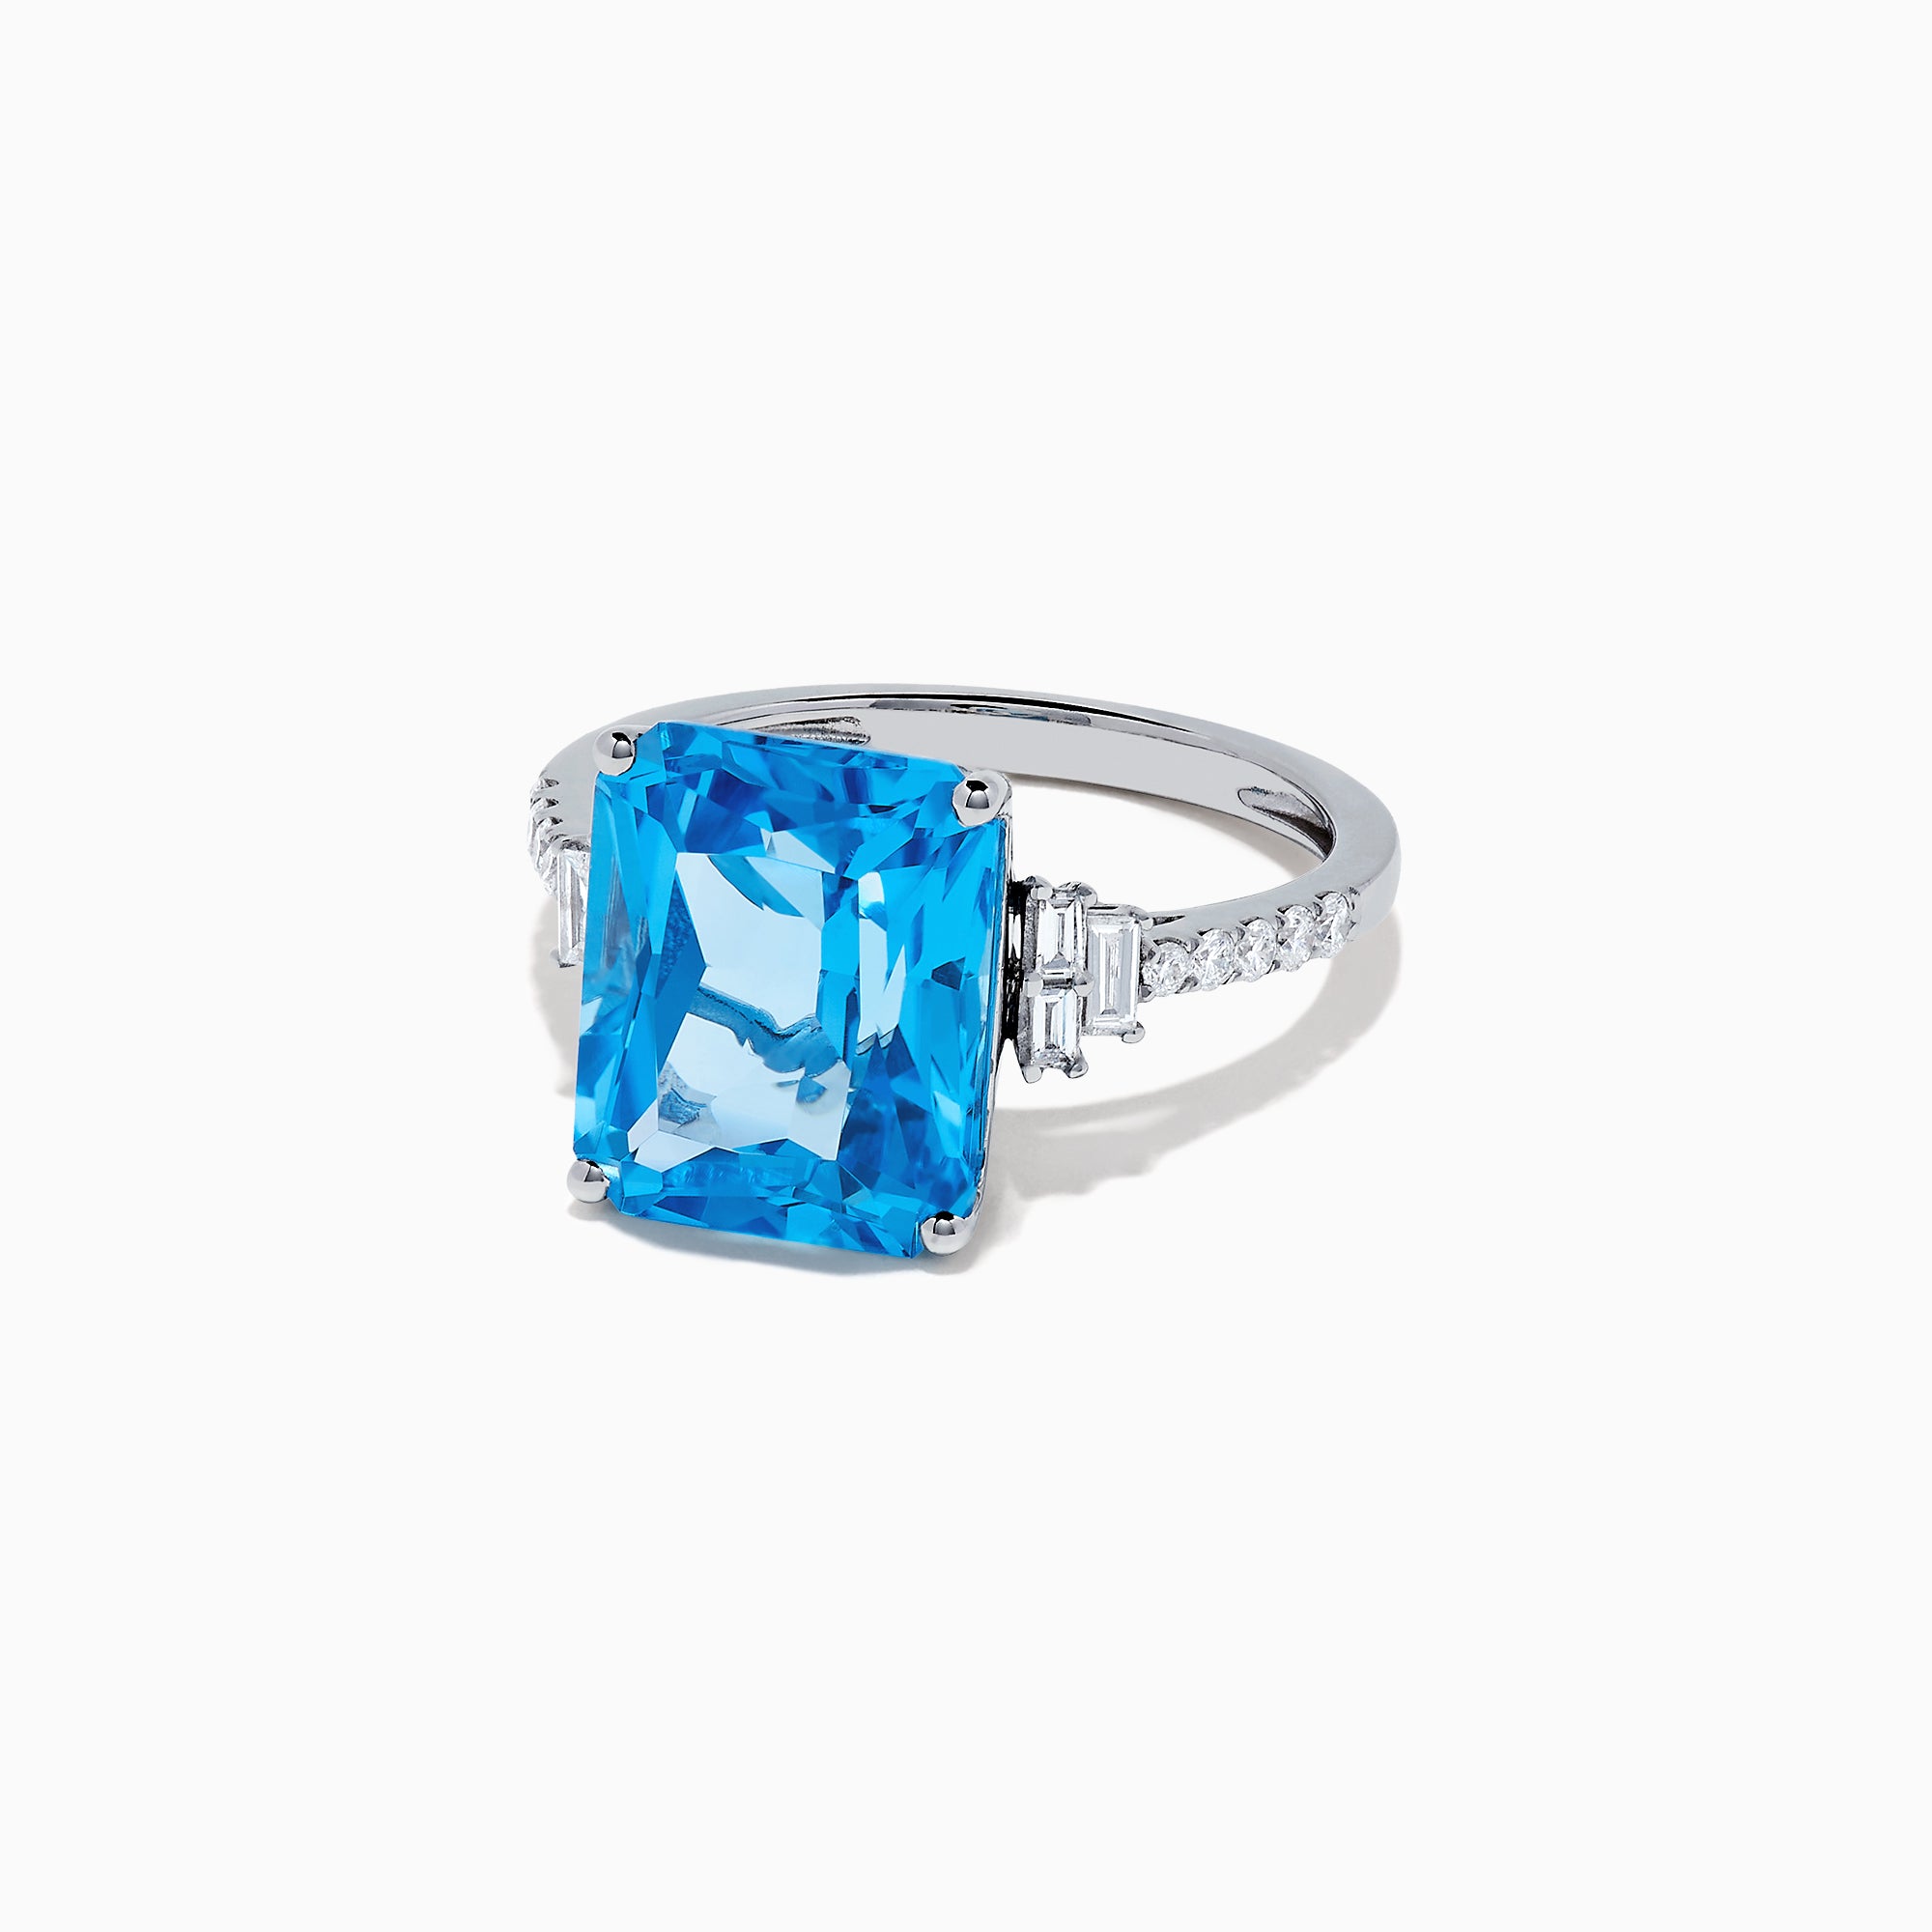 Effy Ocean Bleu 14K White Gold Blue Topaz and Diamond Ring, 8.83 TCW